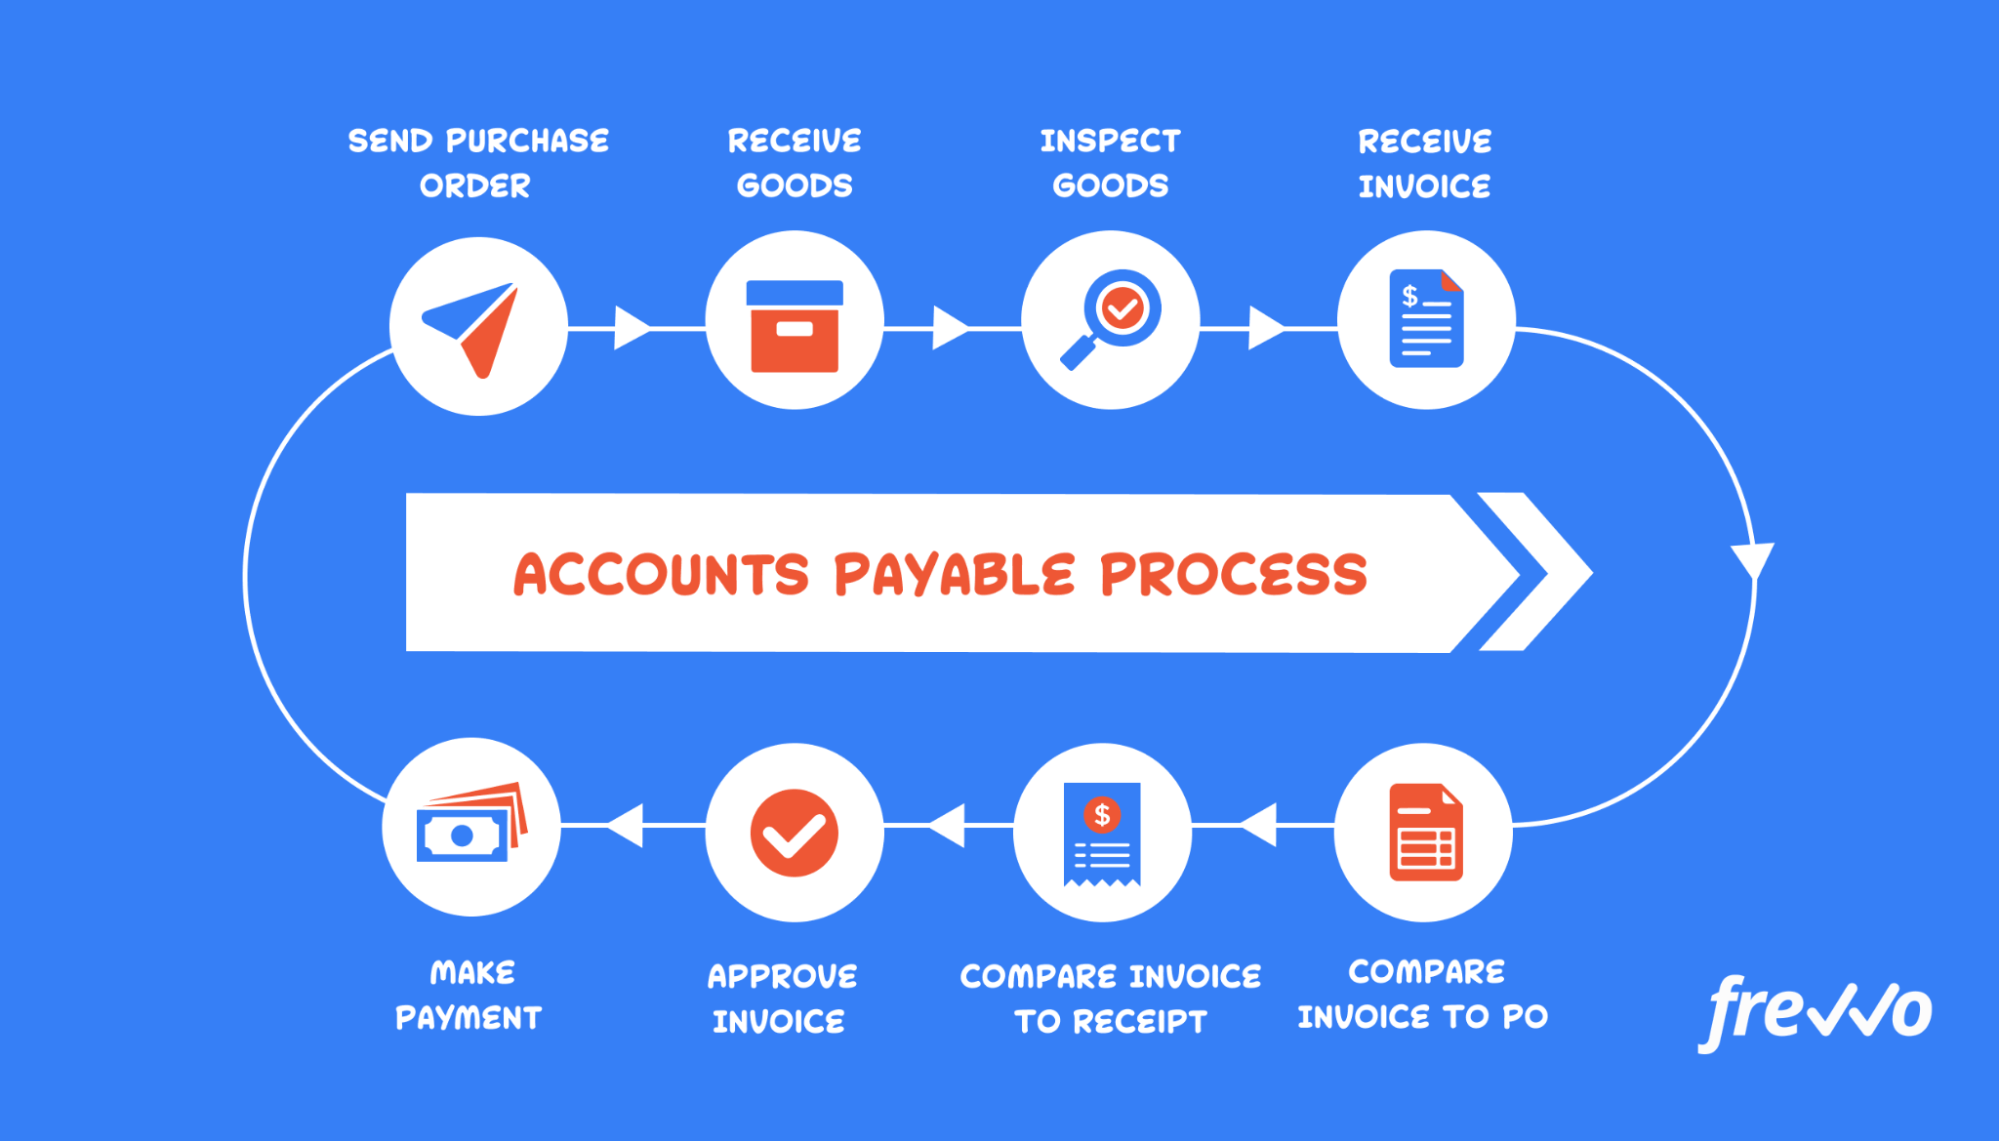 Accounts Payable Process 2022 Guide frevvo Blog